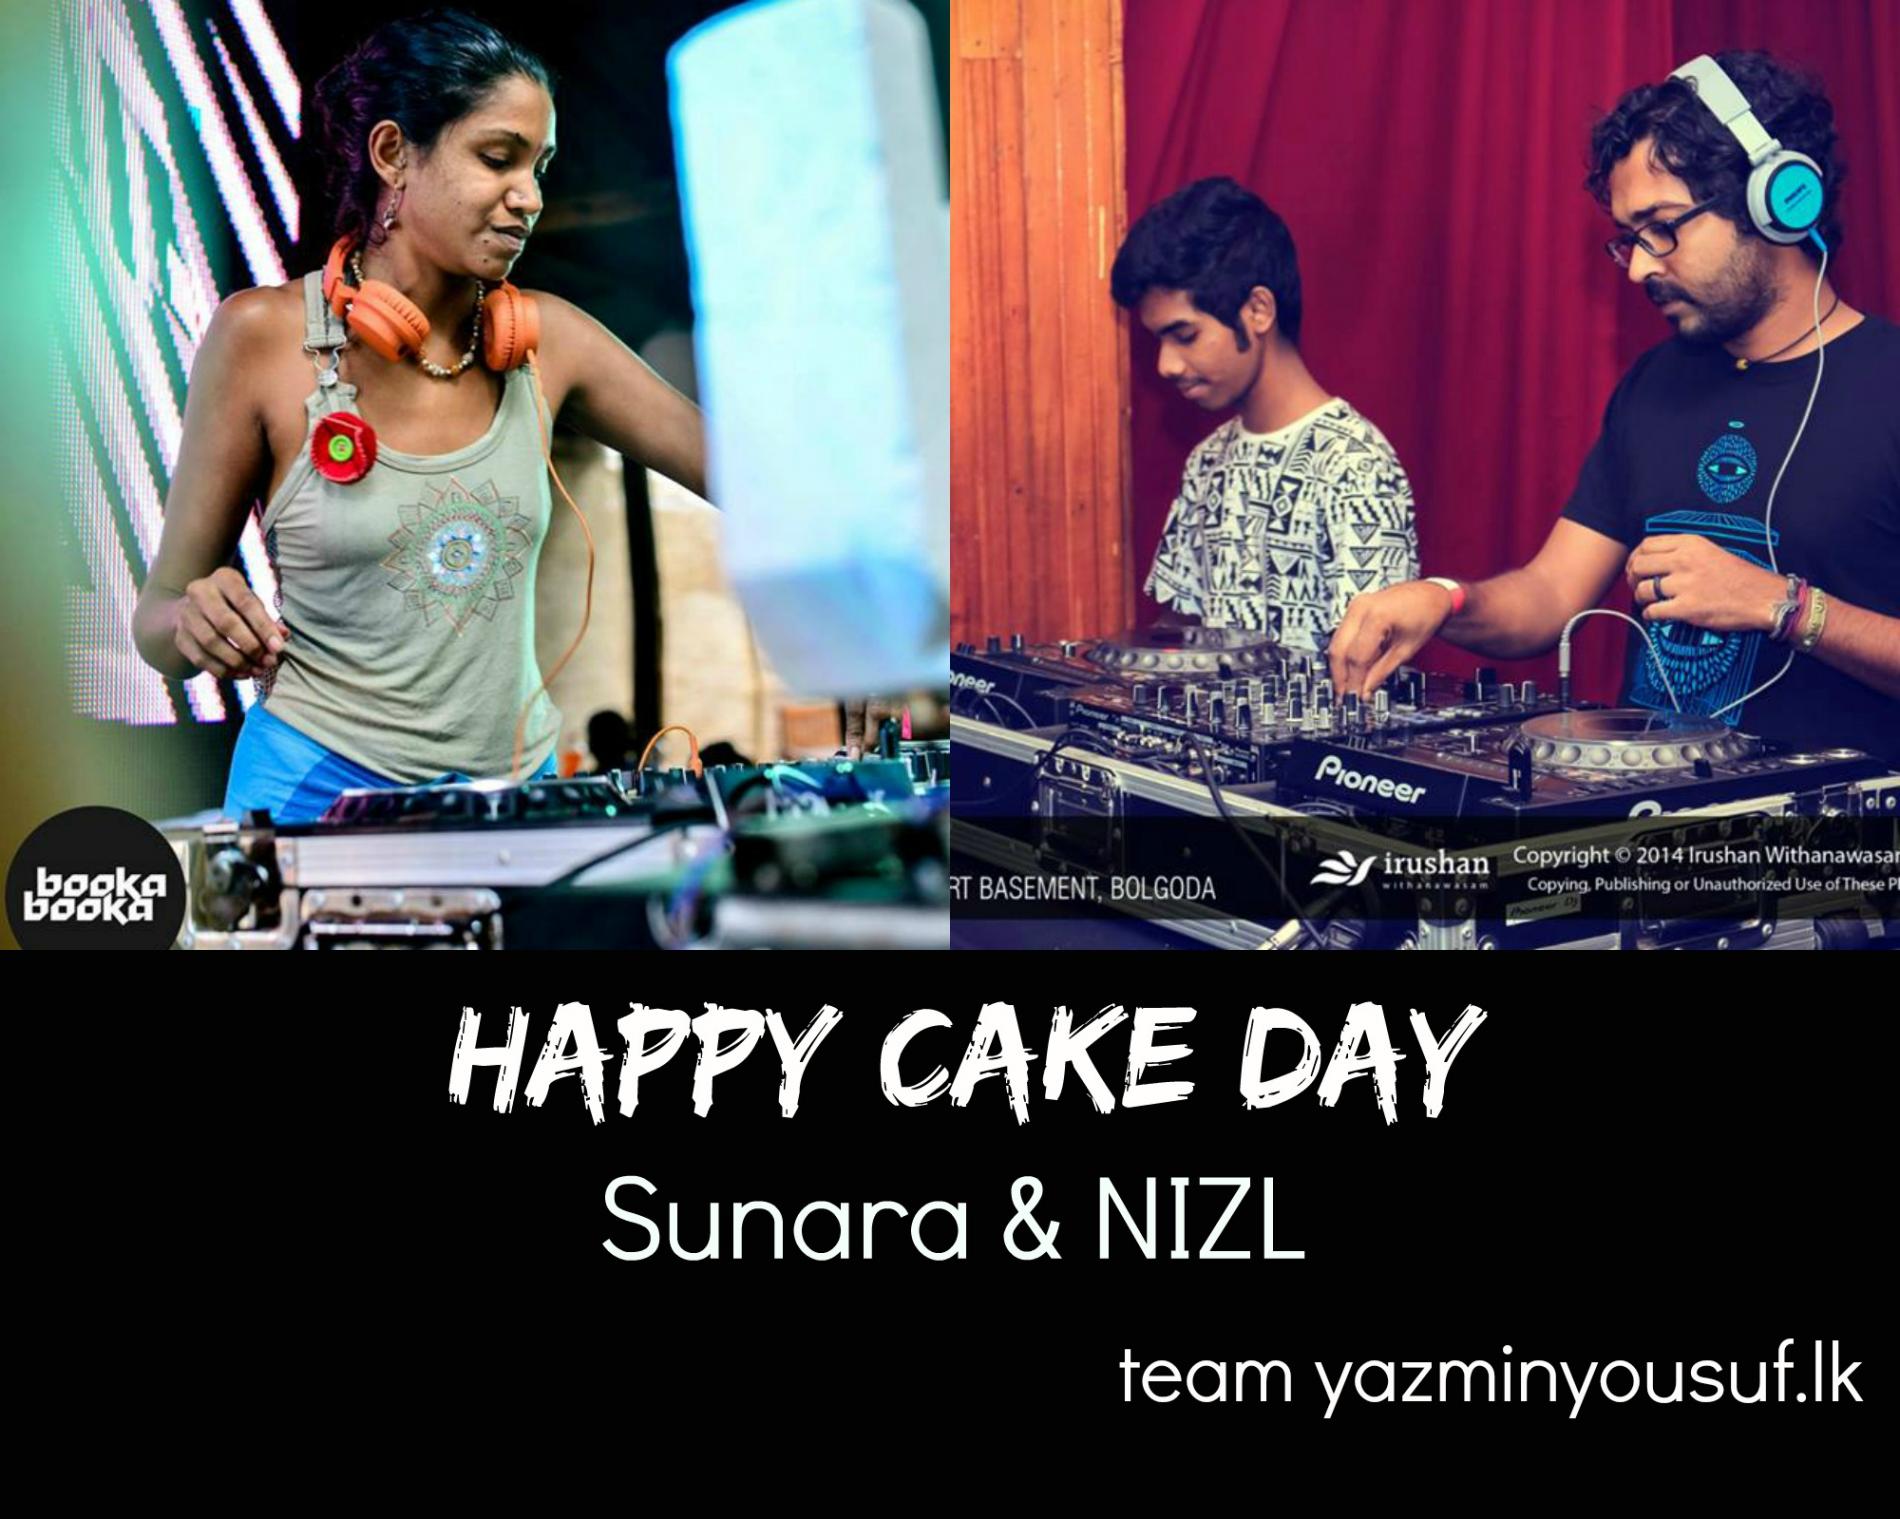 Happy Cake Day To Sunara & Nizl